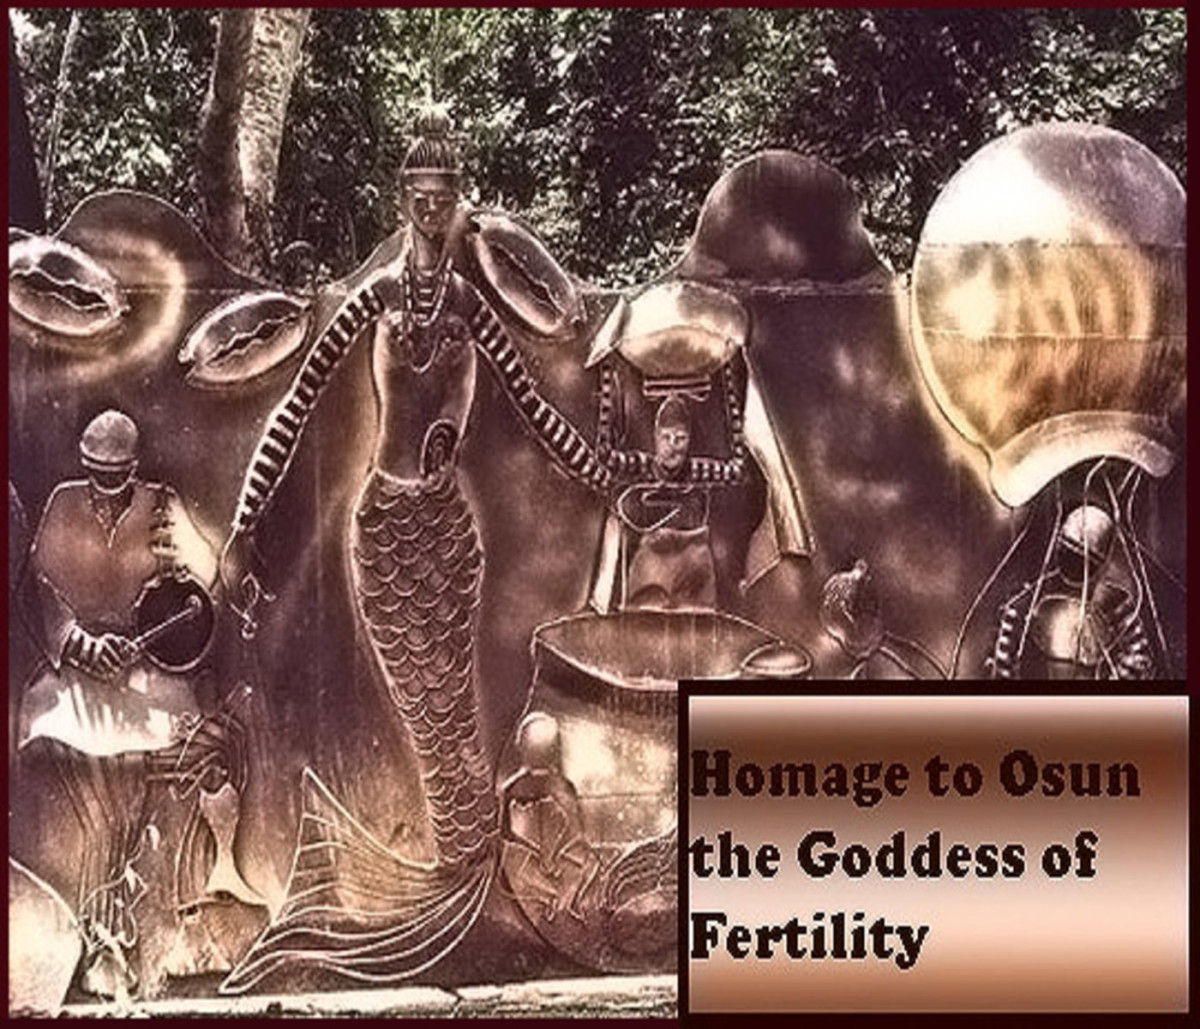 Homage to Osun the Goddess of Fertility